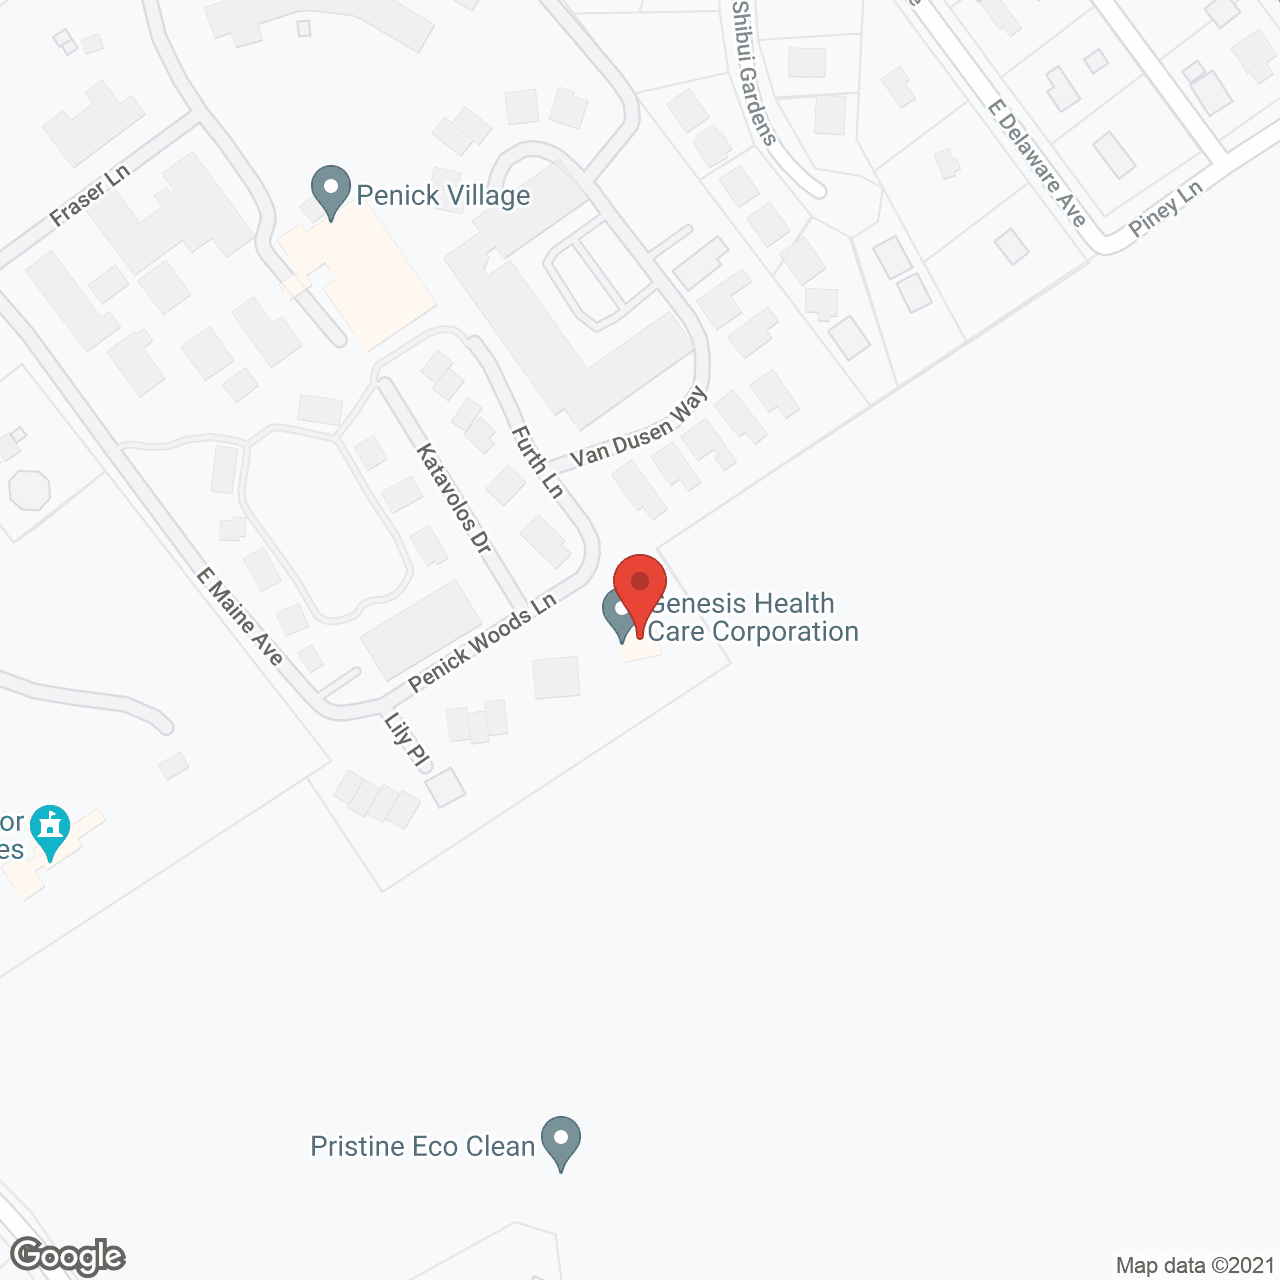 Penick Village in google map